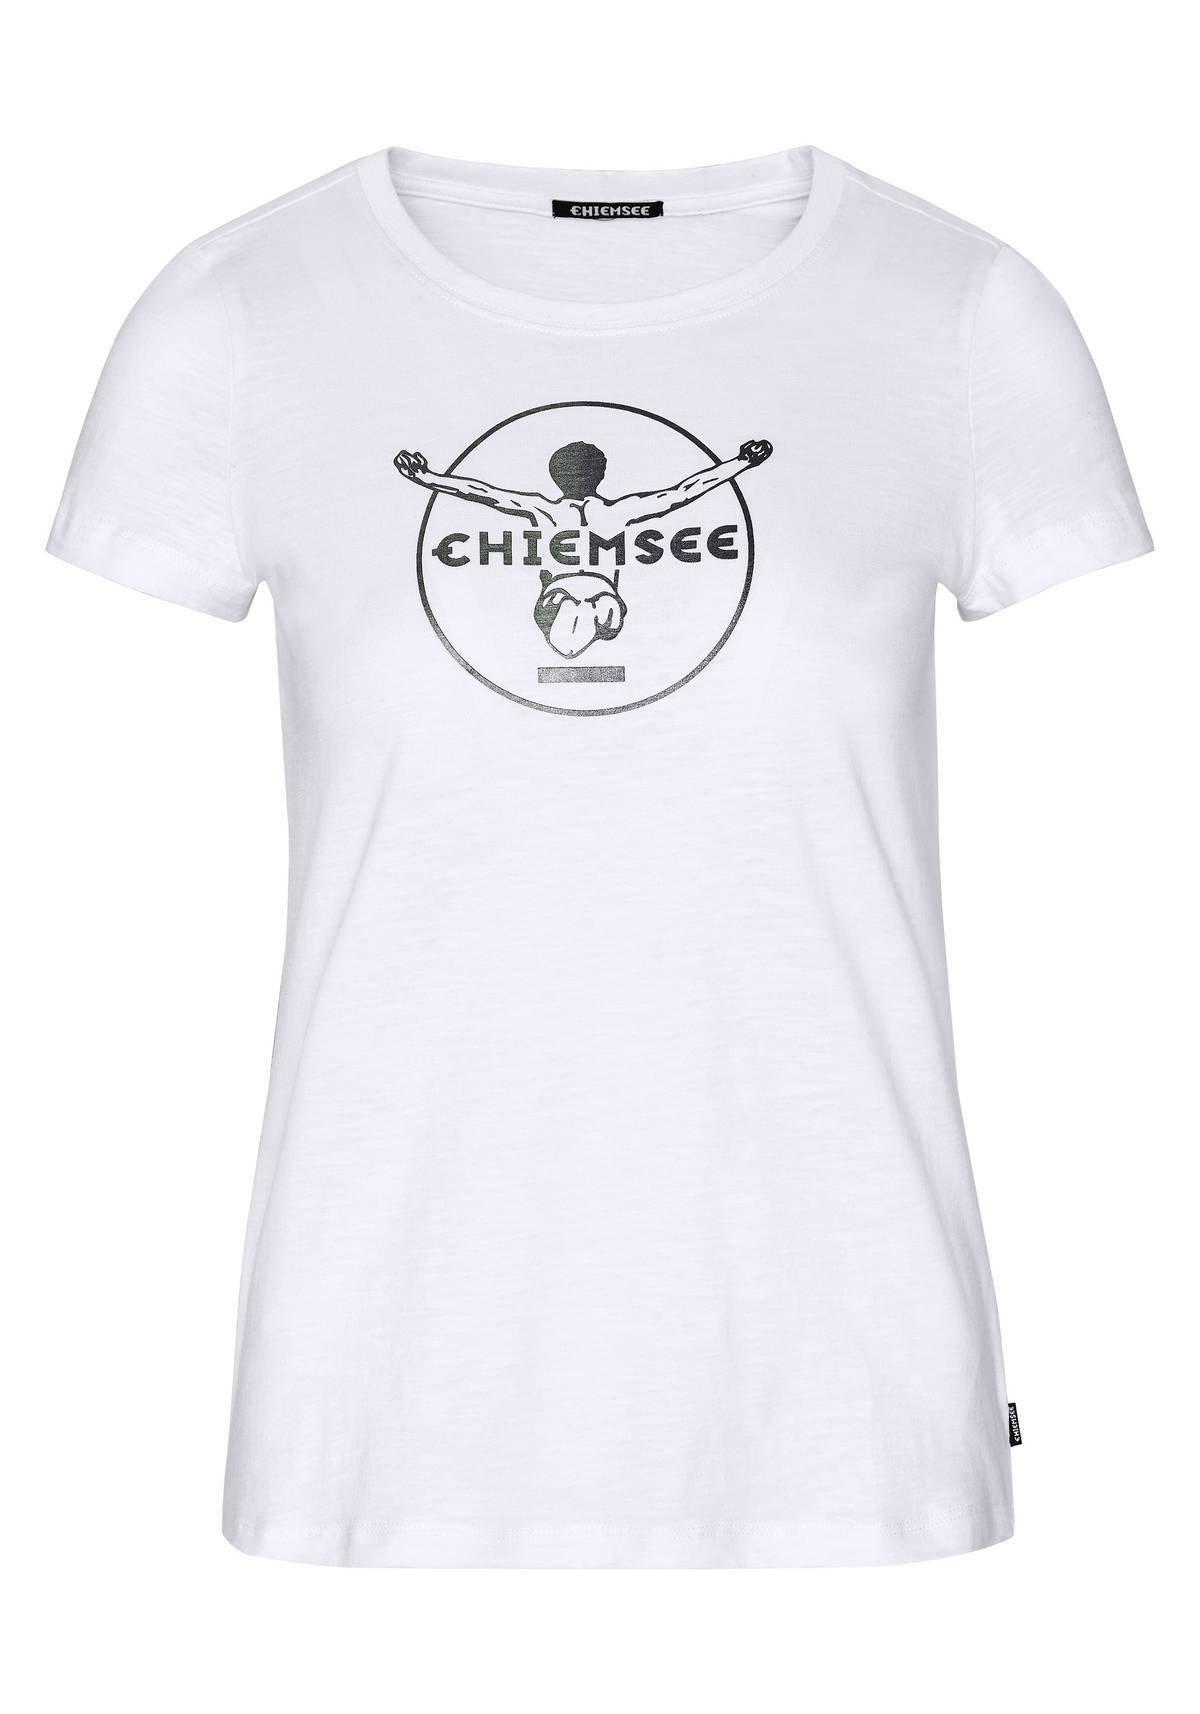 Chiemsee  T-Shirt  Bequem sitzend-Taormina 